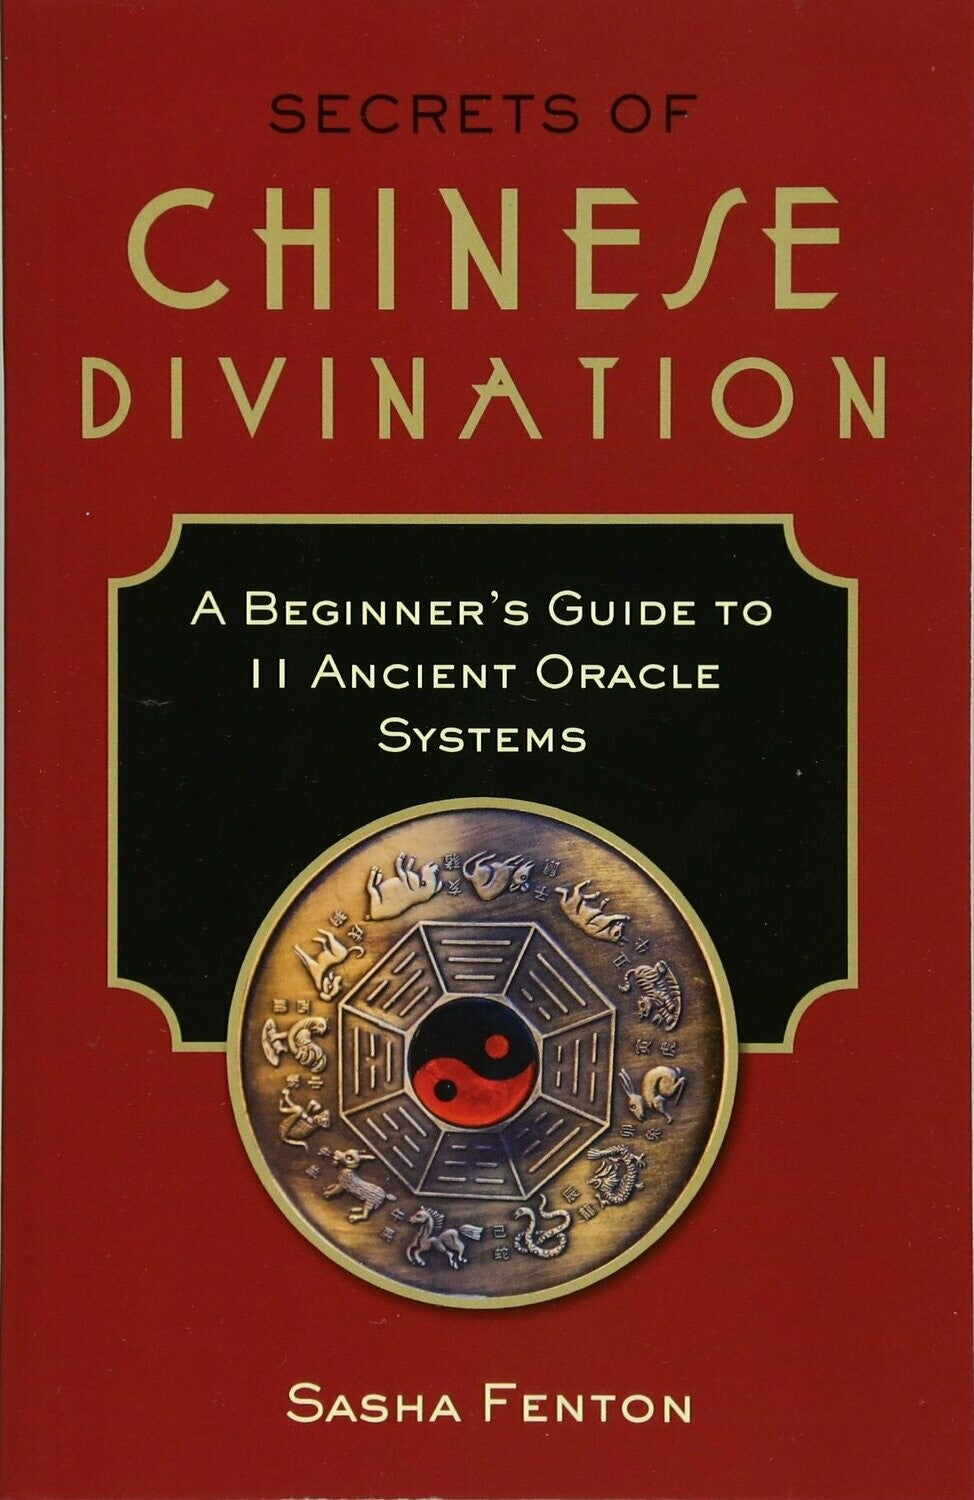 Secrets of Chinese Divination by Sasha Fenton